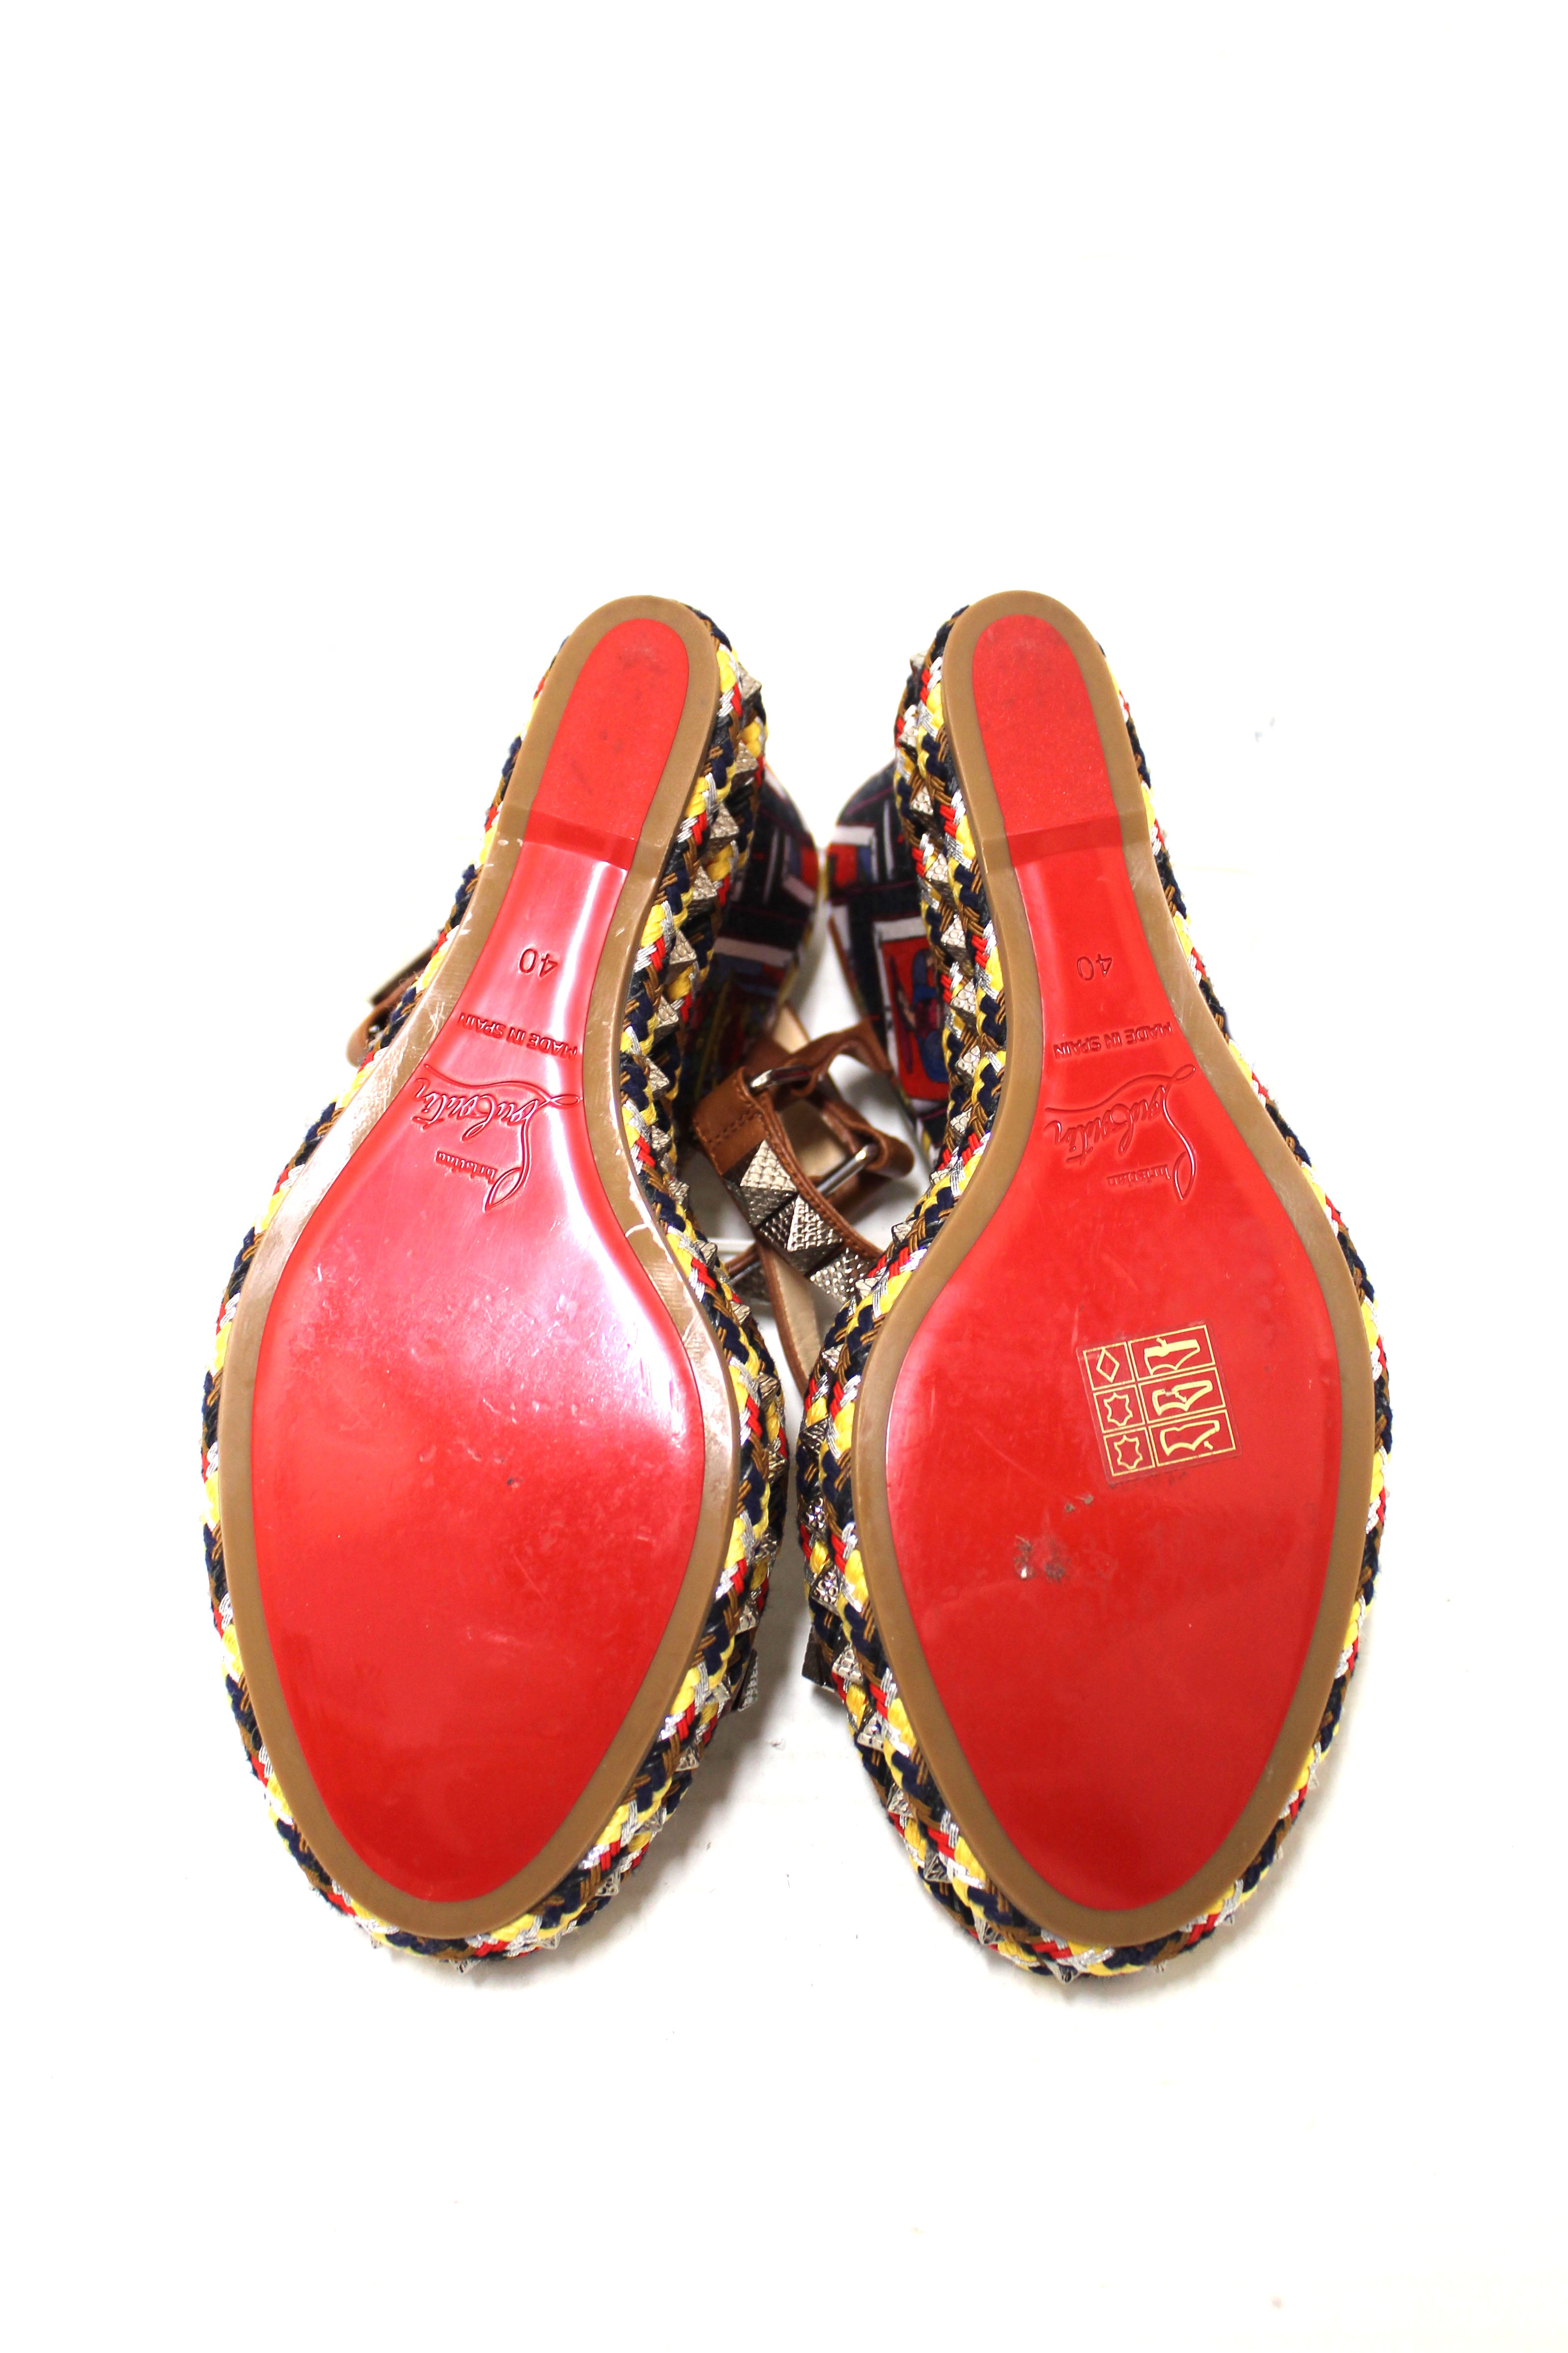 Authentic Christian Louboutin Pyraclou Tarot Wedge Espadrille Sandals size 40